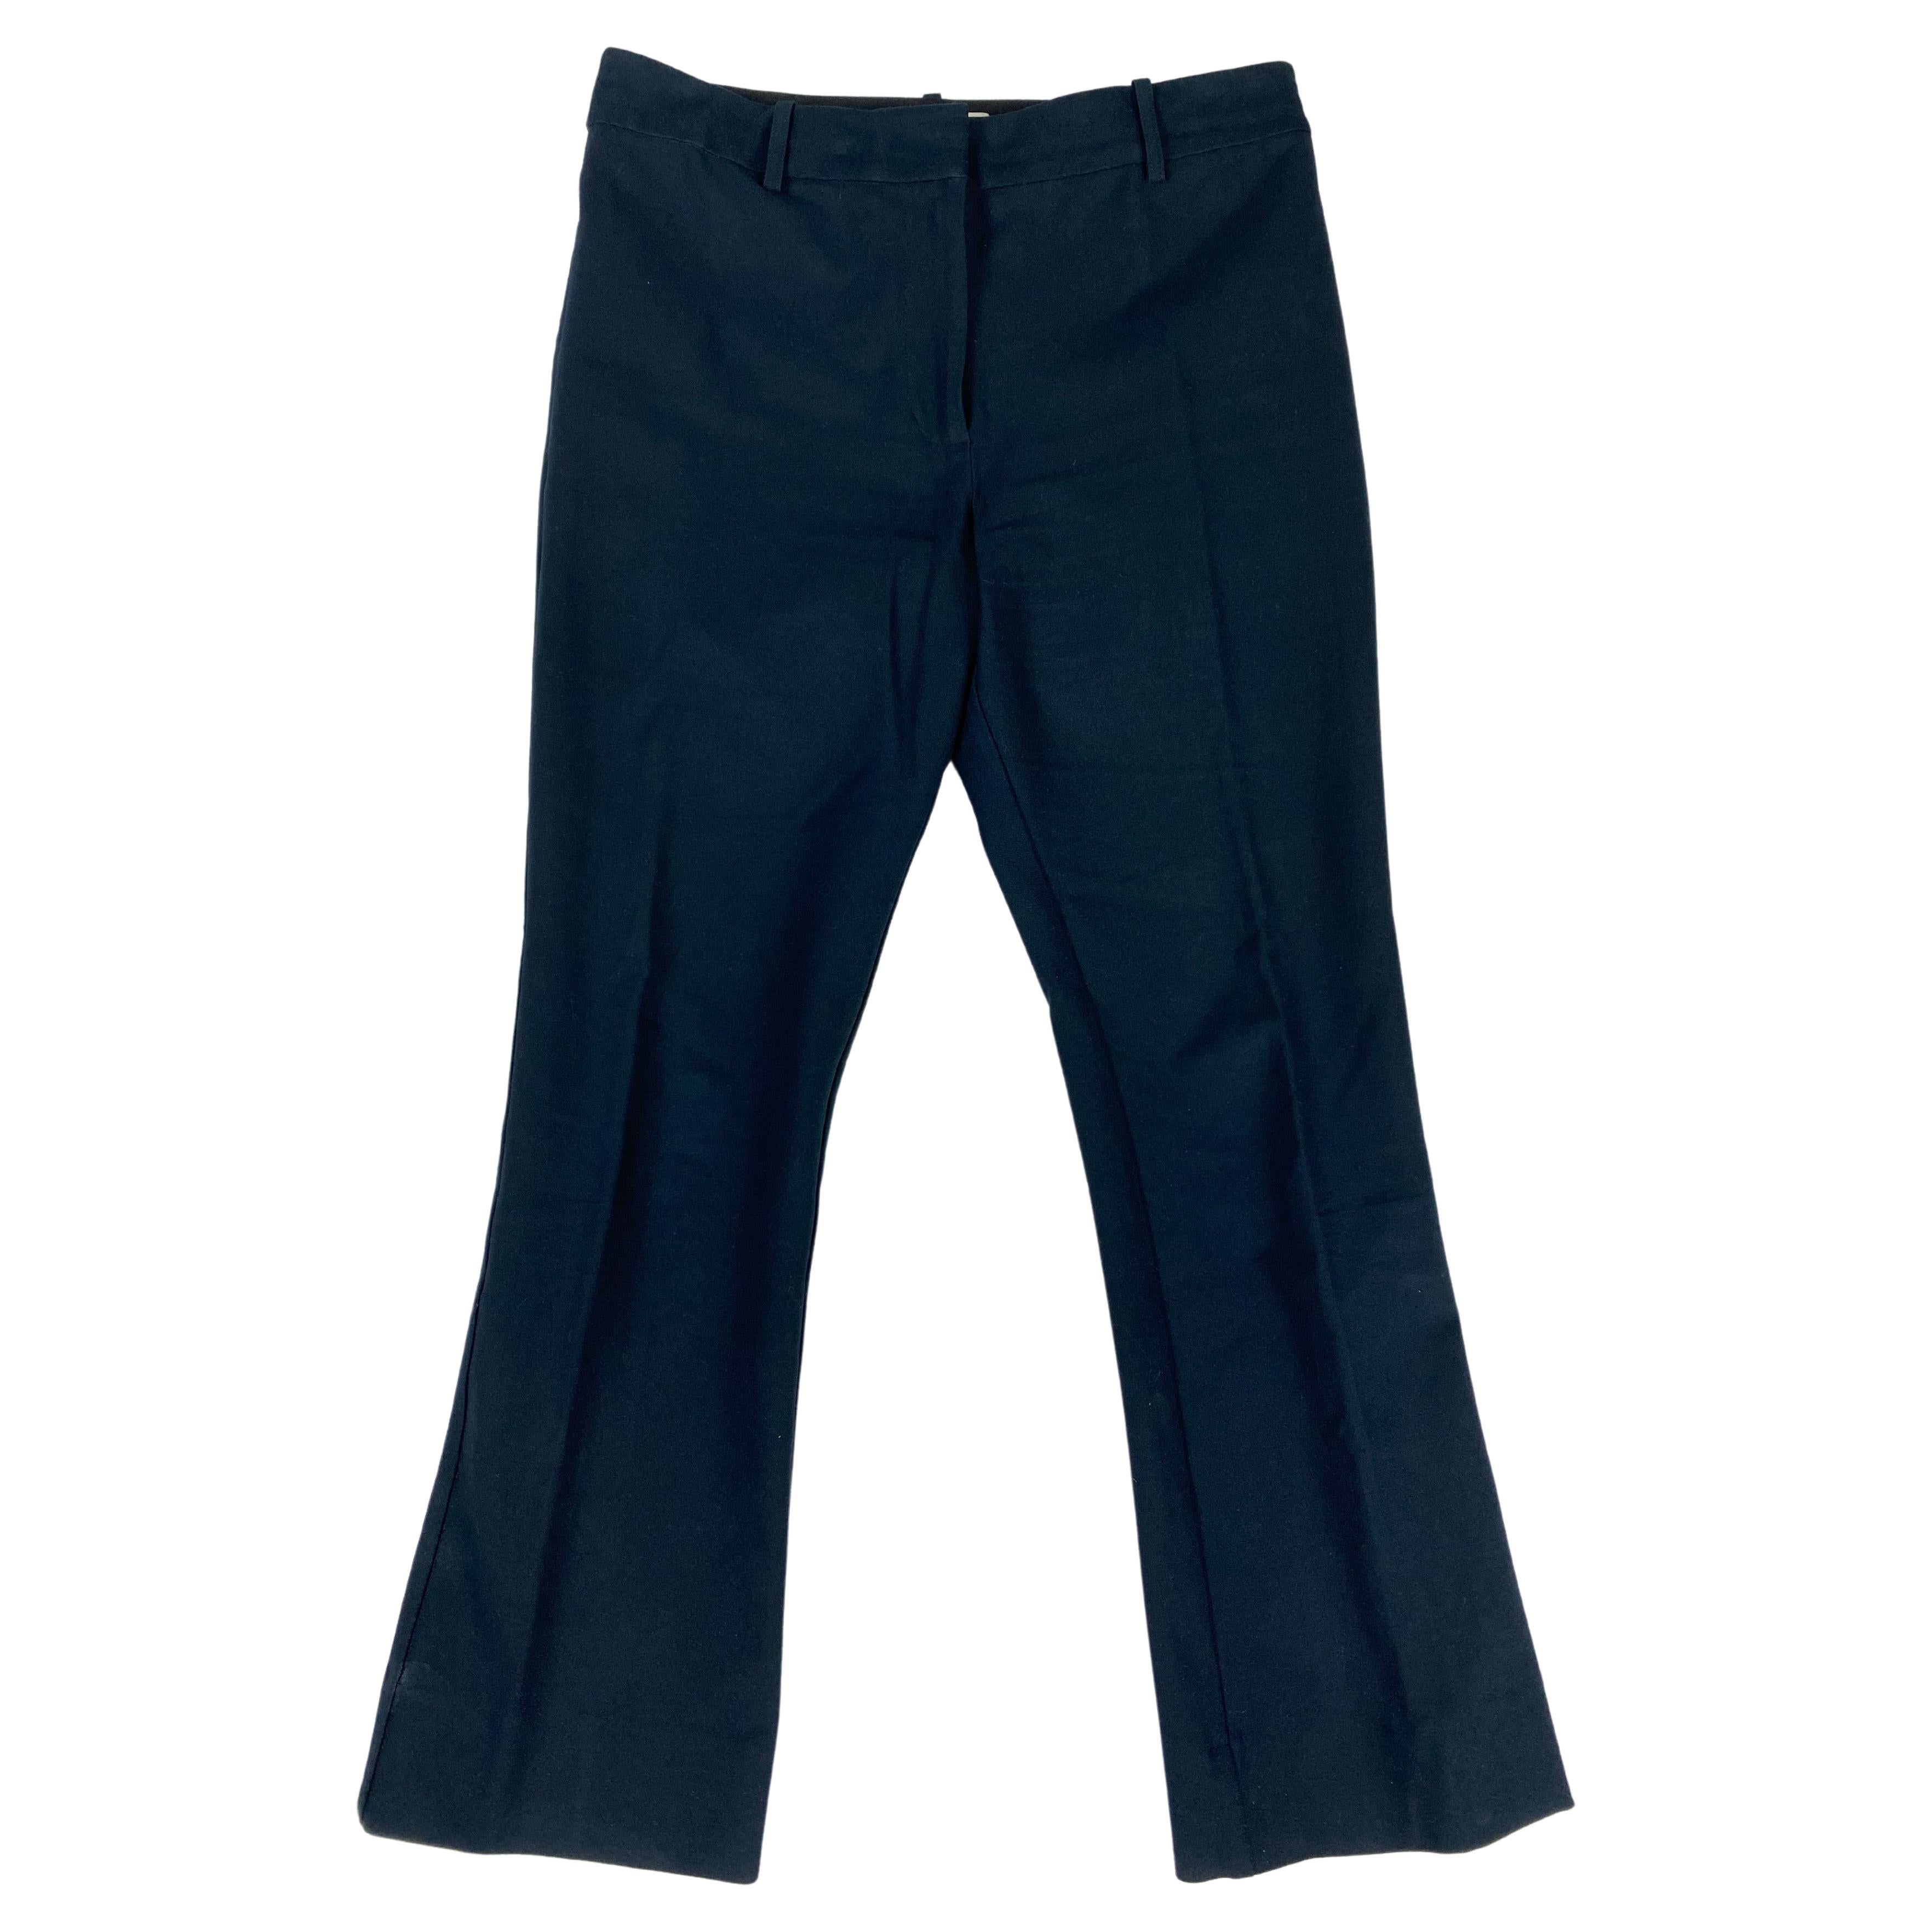 Derek Lam 10 Crosby Navy Pants, Size 6 For Sale